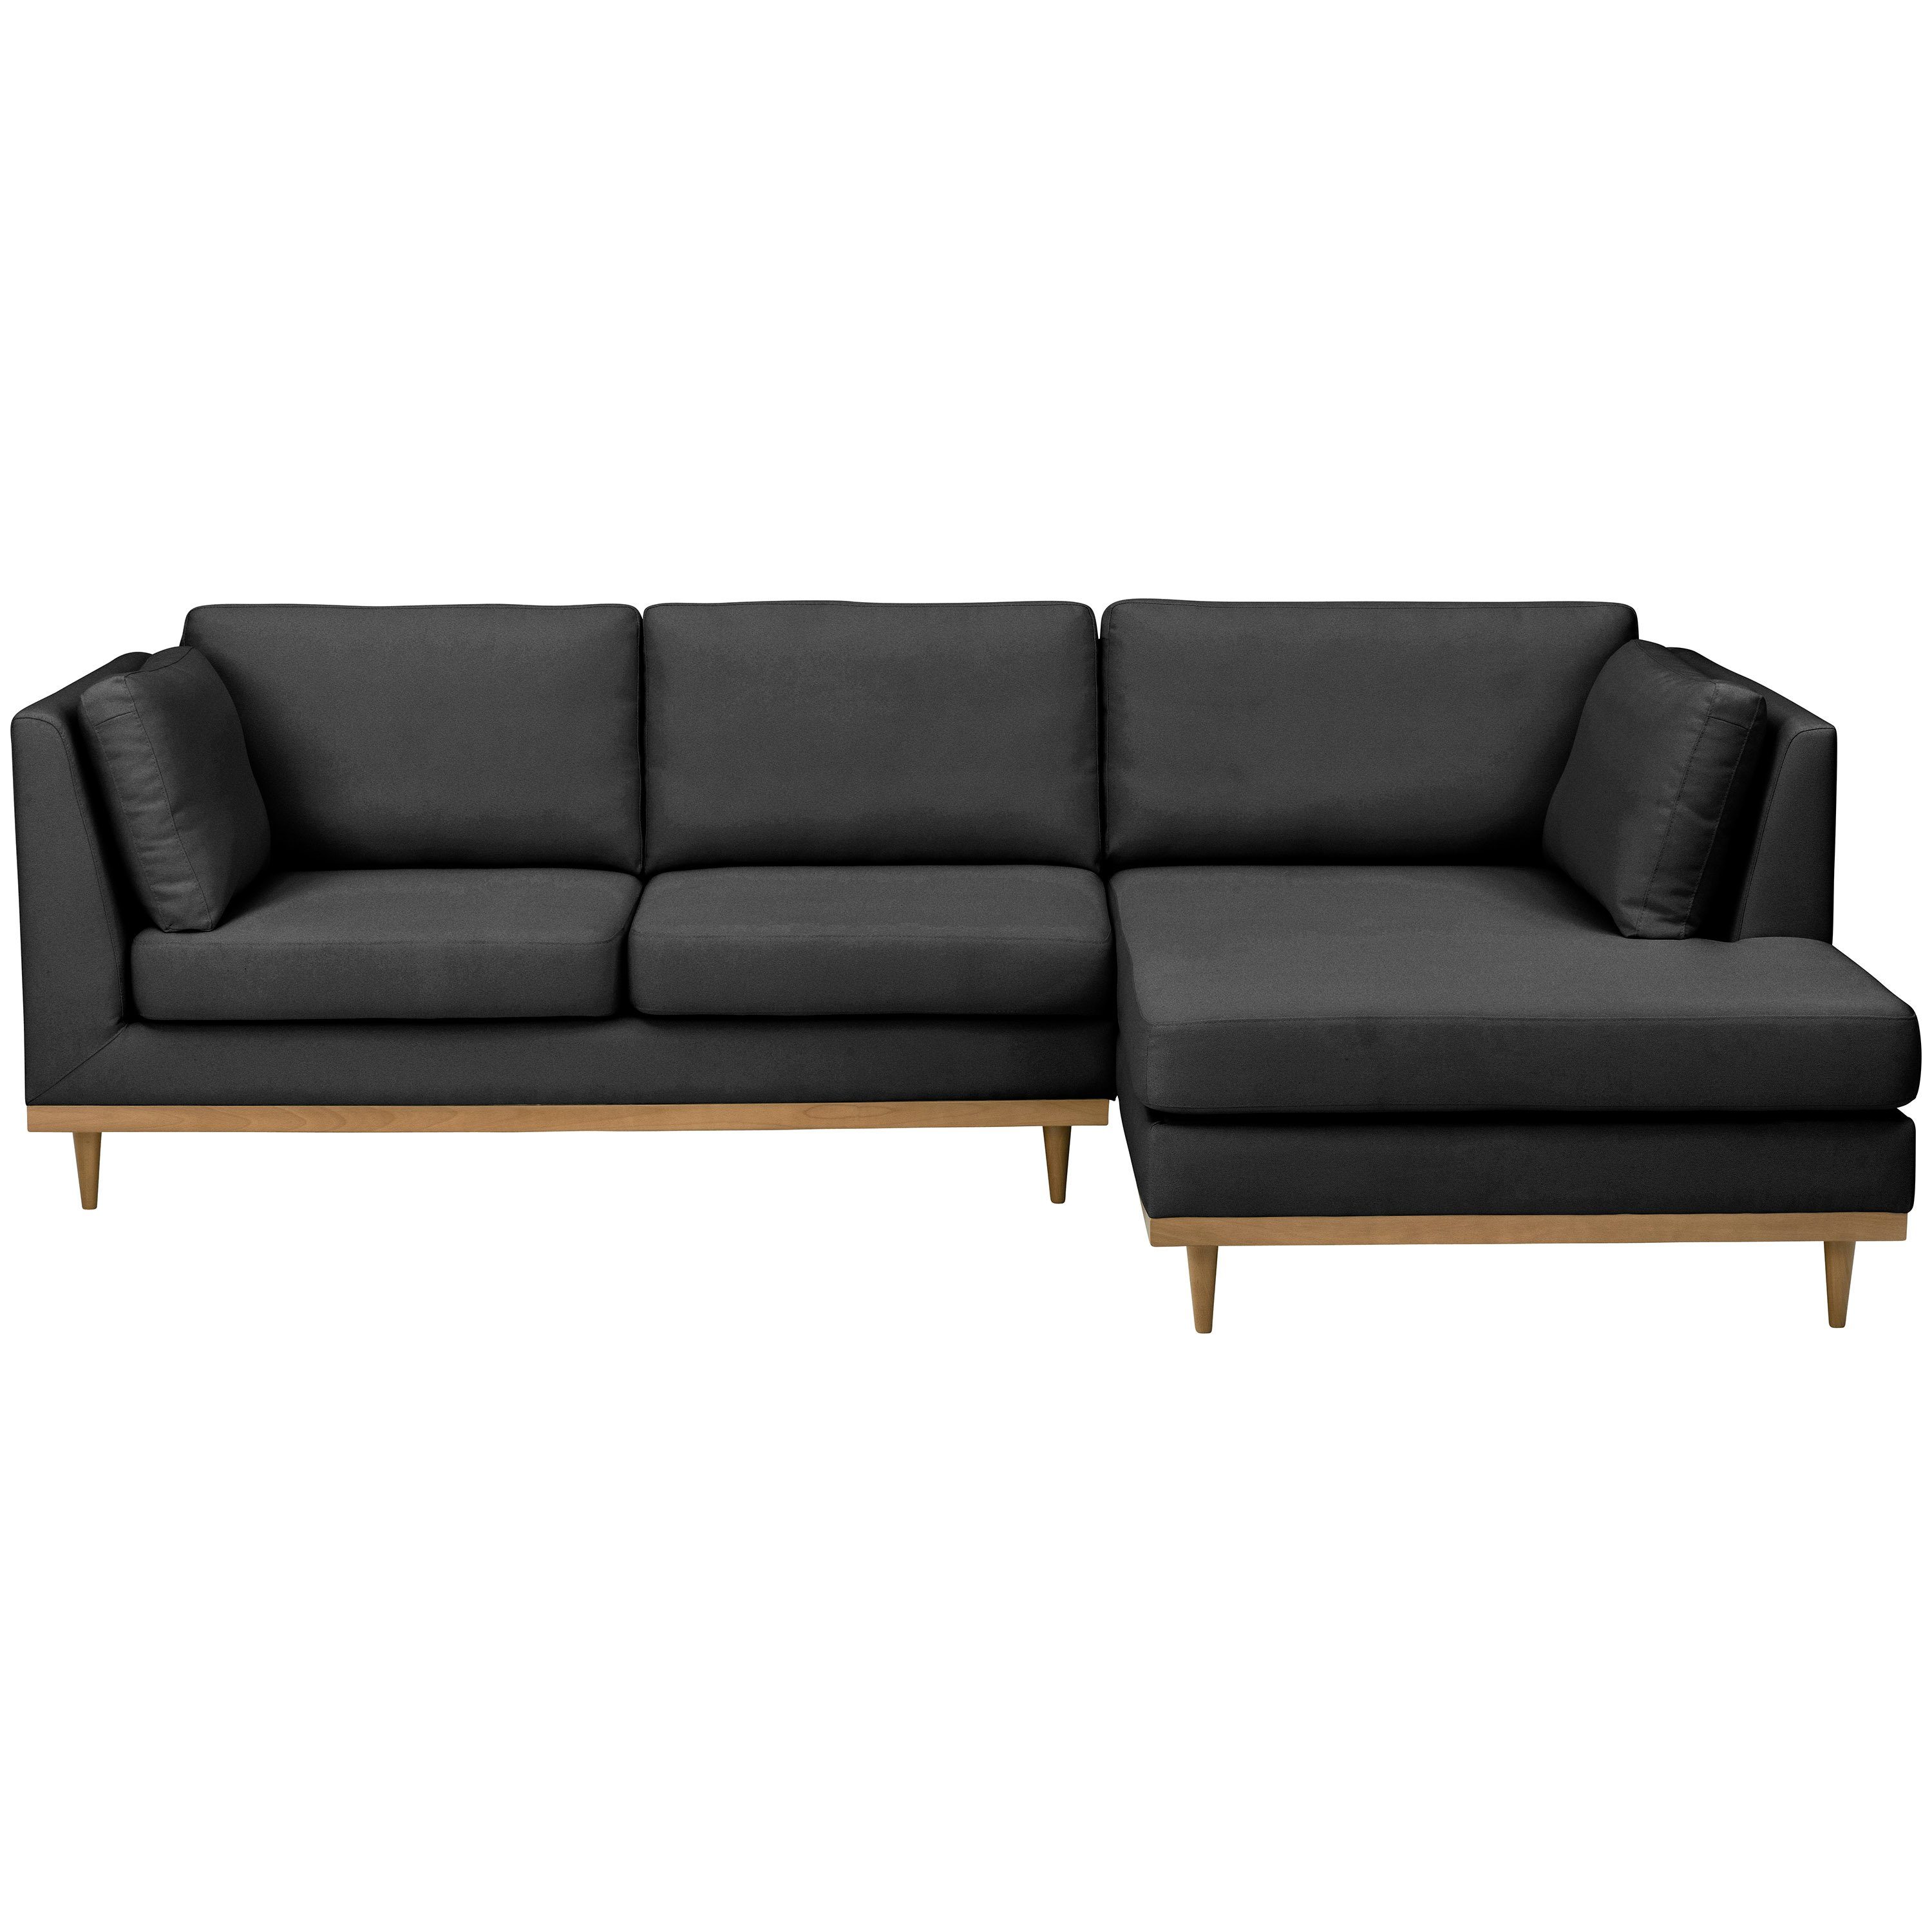 Stück, Winzer® Ecksofa 2-Sitzer mit 1 Larsen Flachgewebe Ecksofa graphit, Sofa Max rechts links skandinavischen im Design Sofa